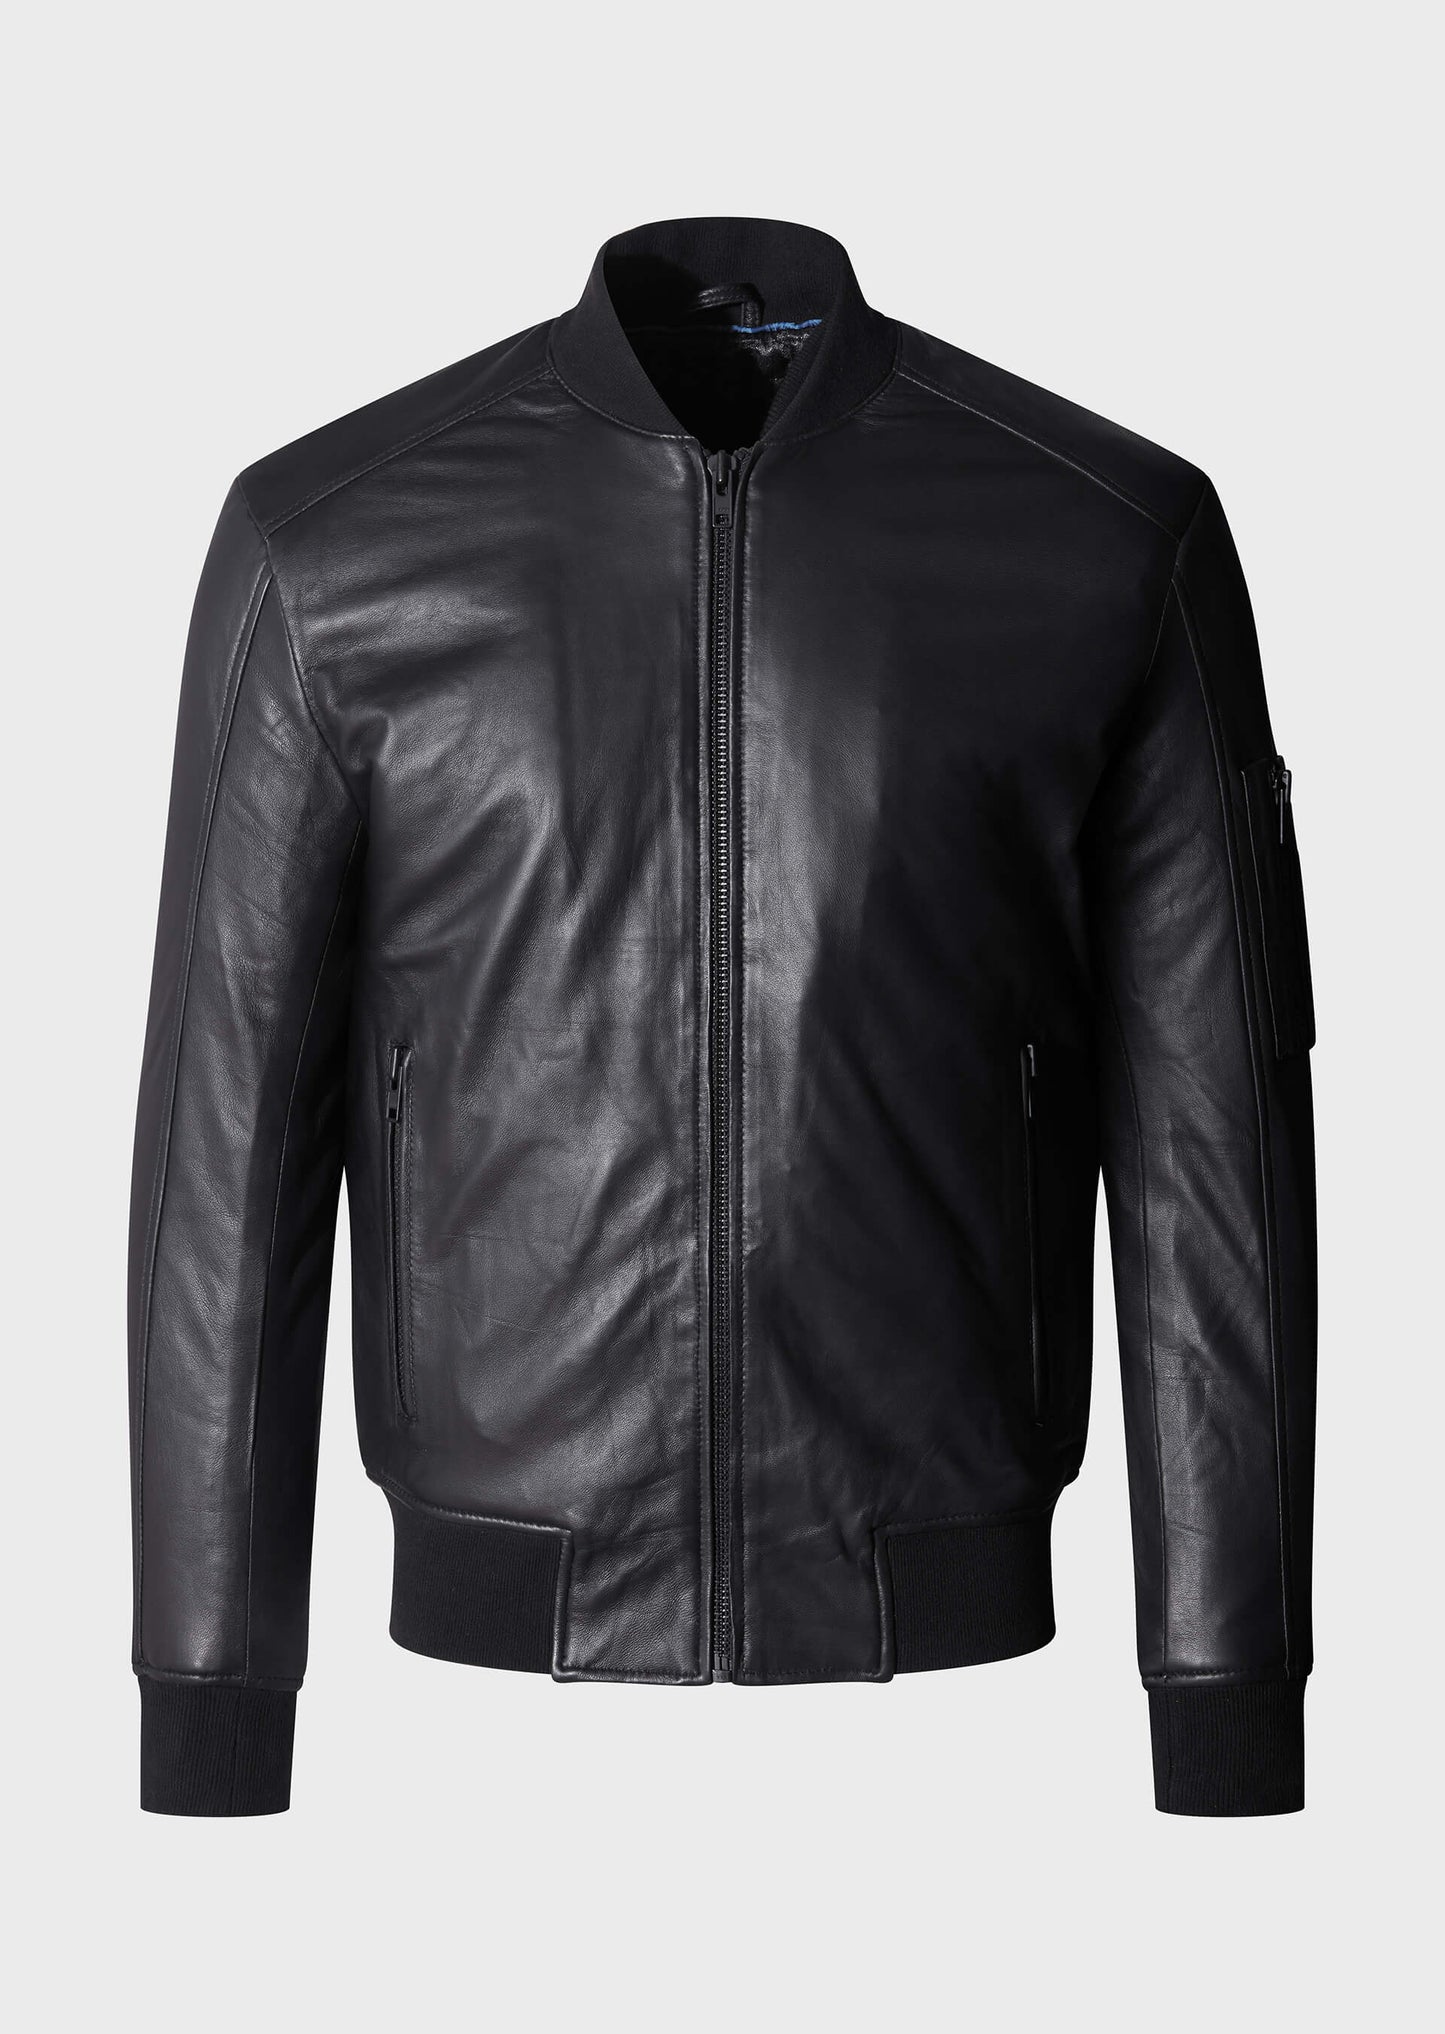 Police Lopen Black Men's Leather Jacket | 883 Police